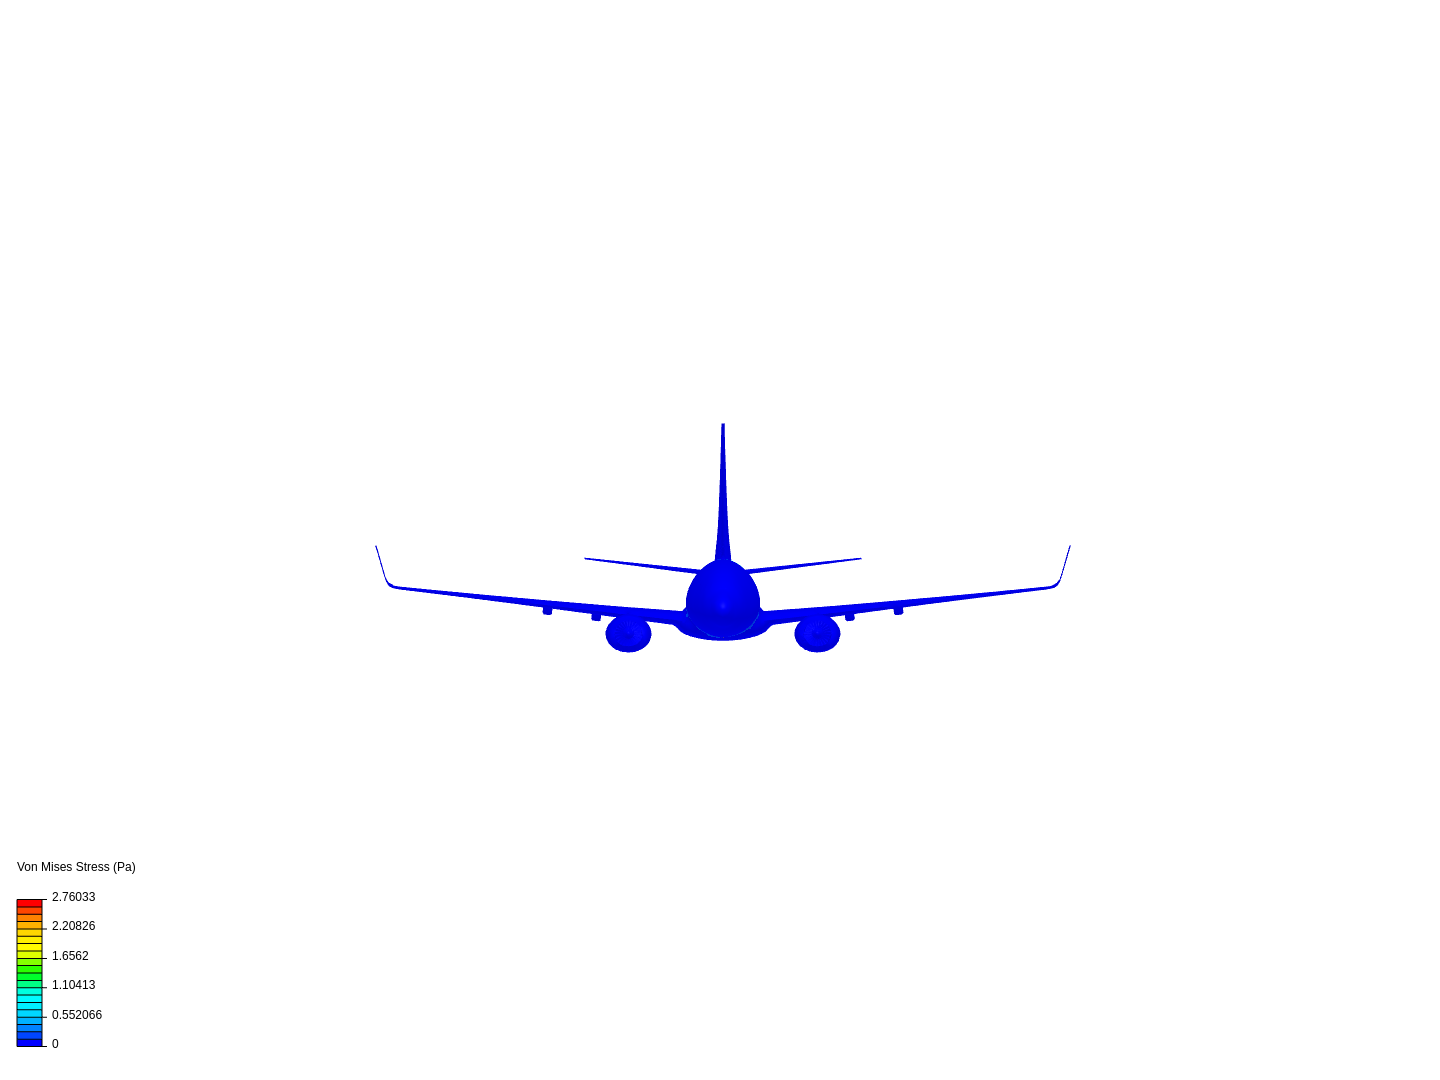 737 blended winglet image